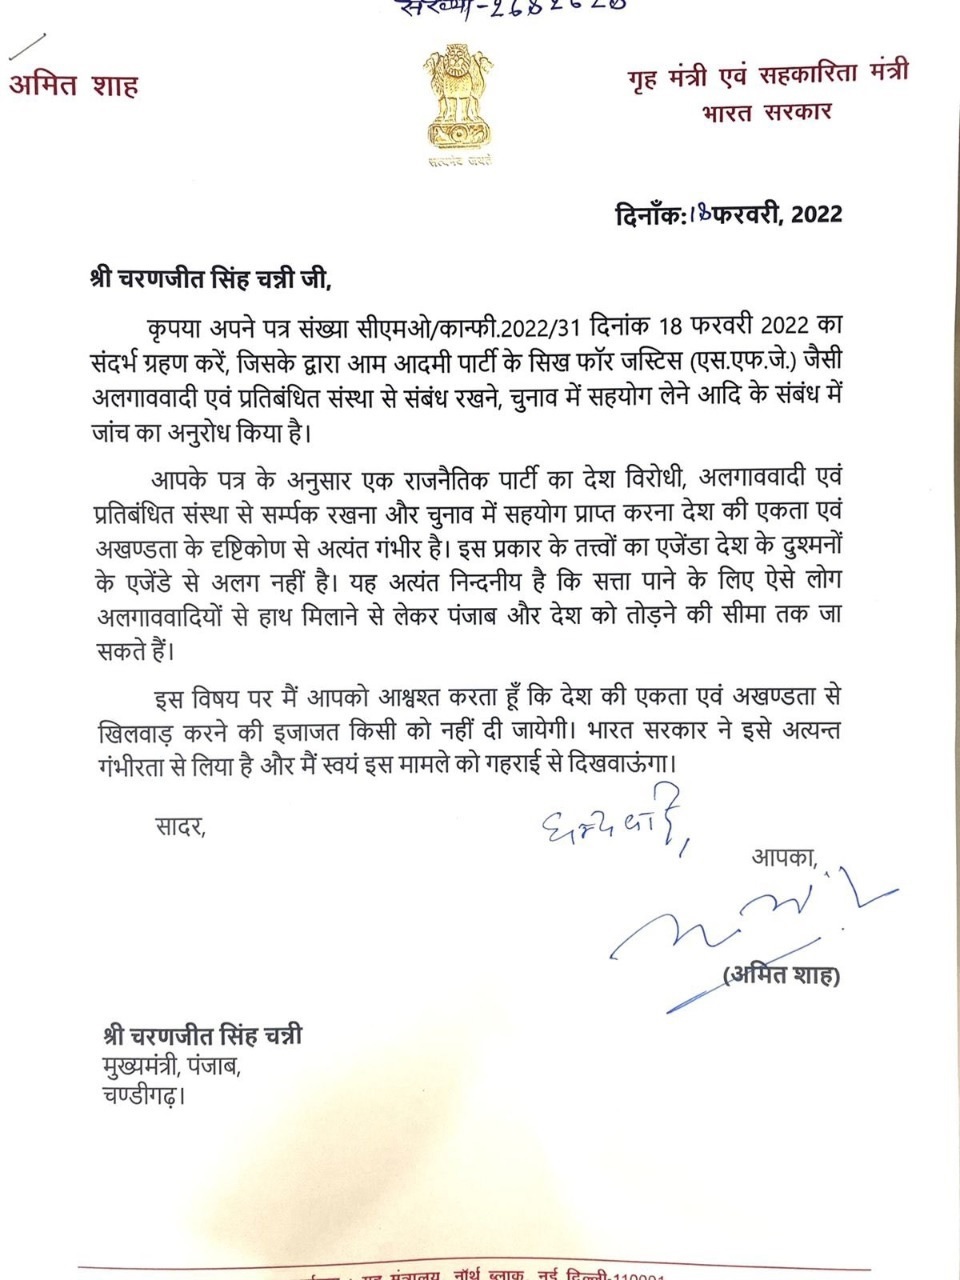 Amit Shah Letter